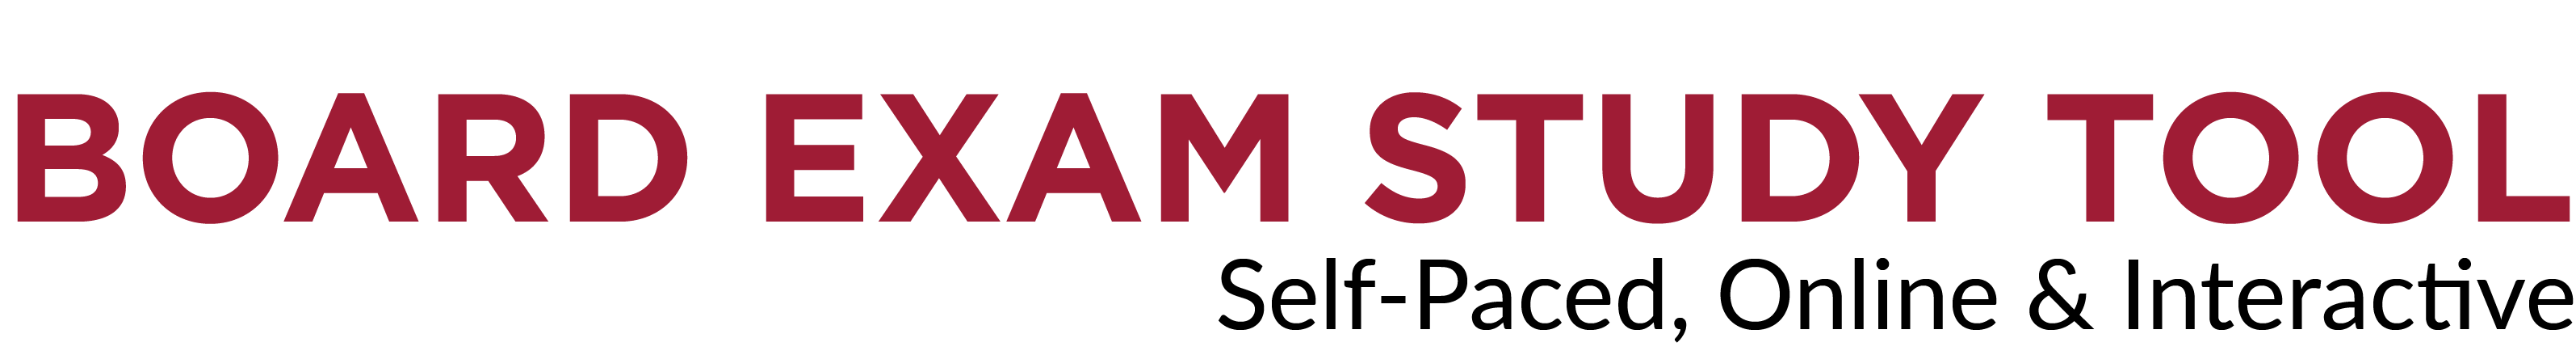 Board Exam Study Tool Logo